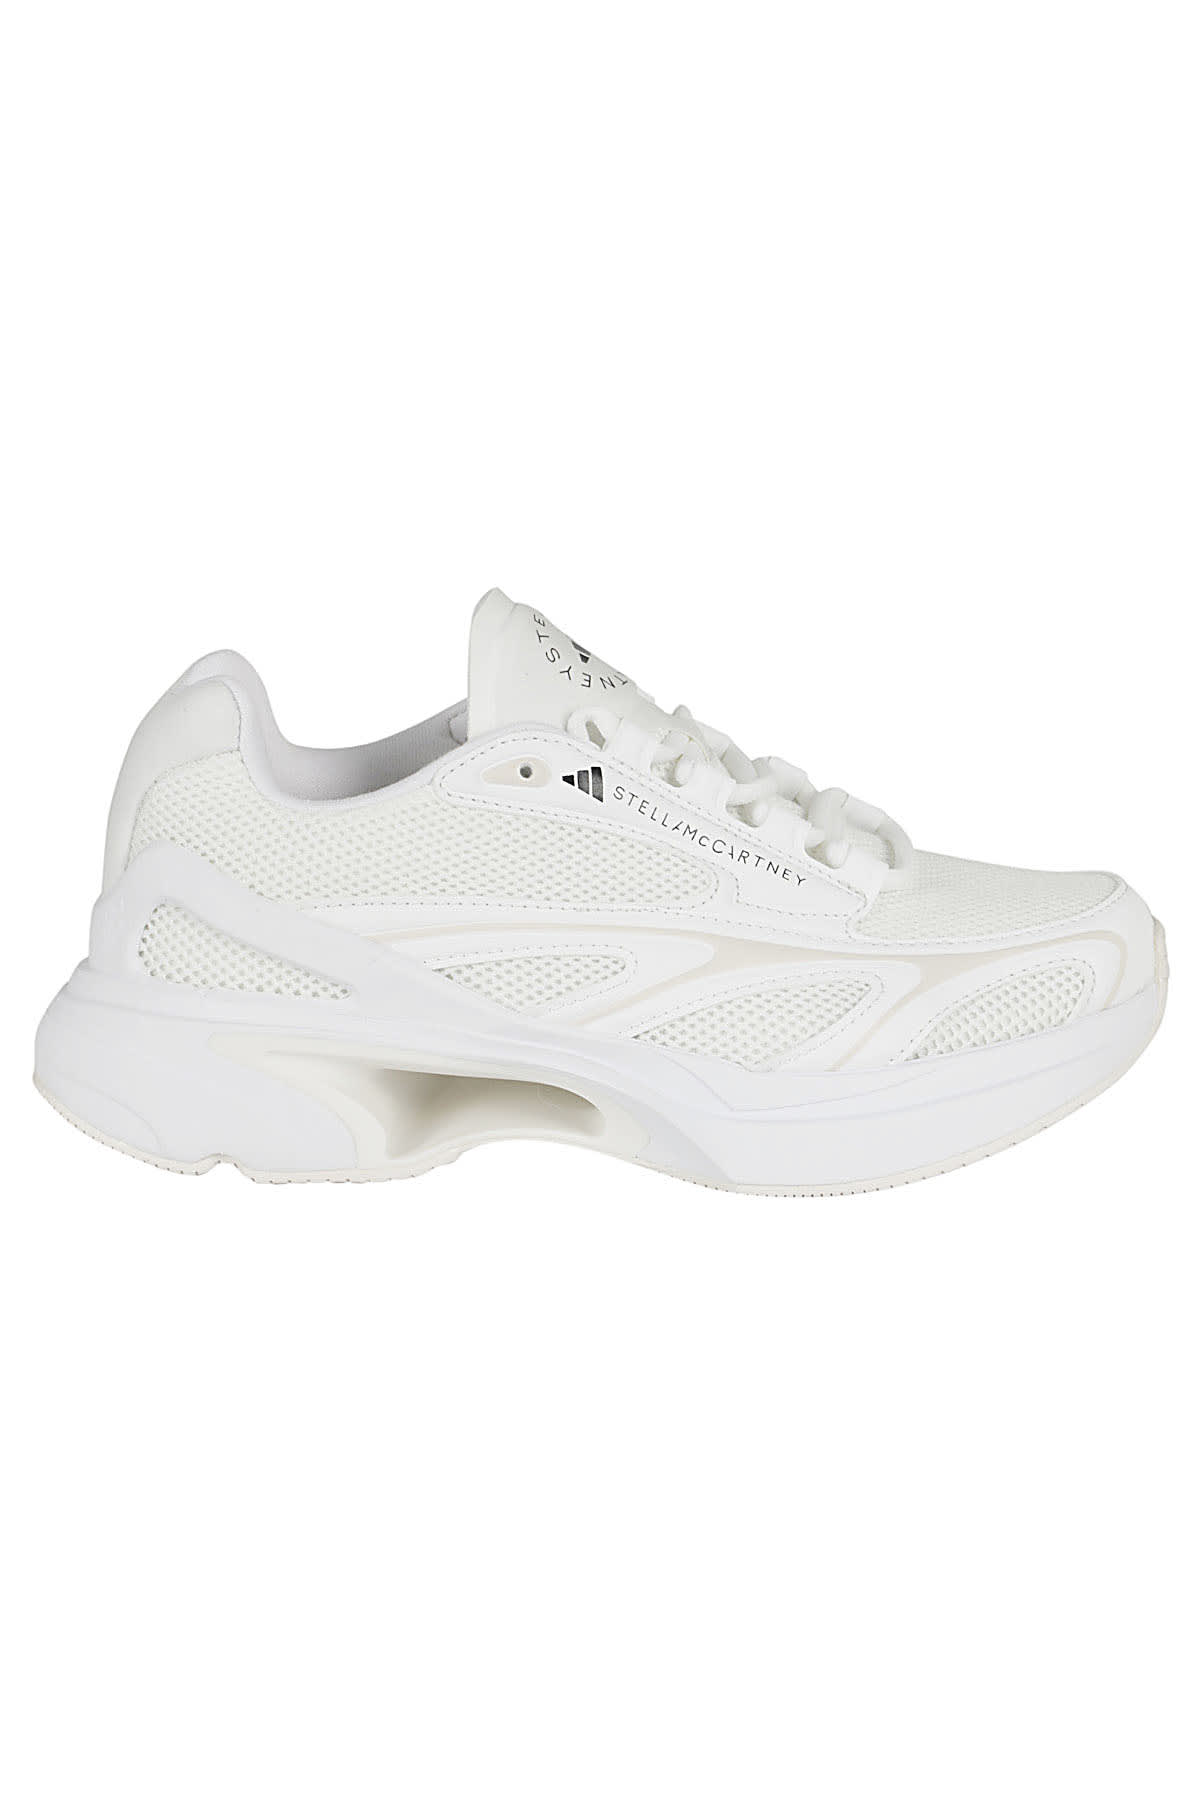 Adidas By Stella Mccartney Sports Wear In White